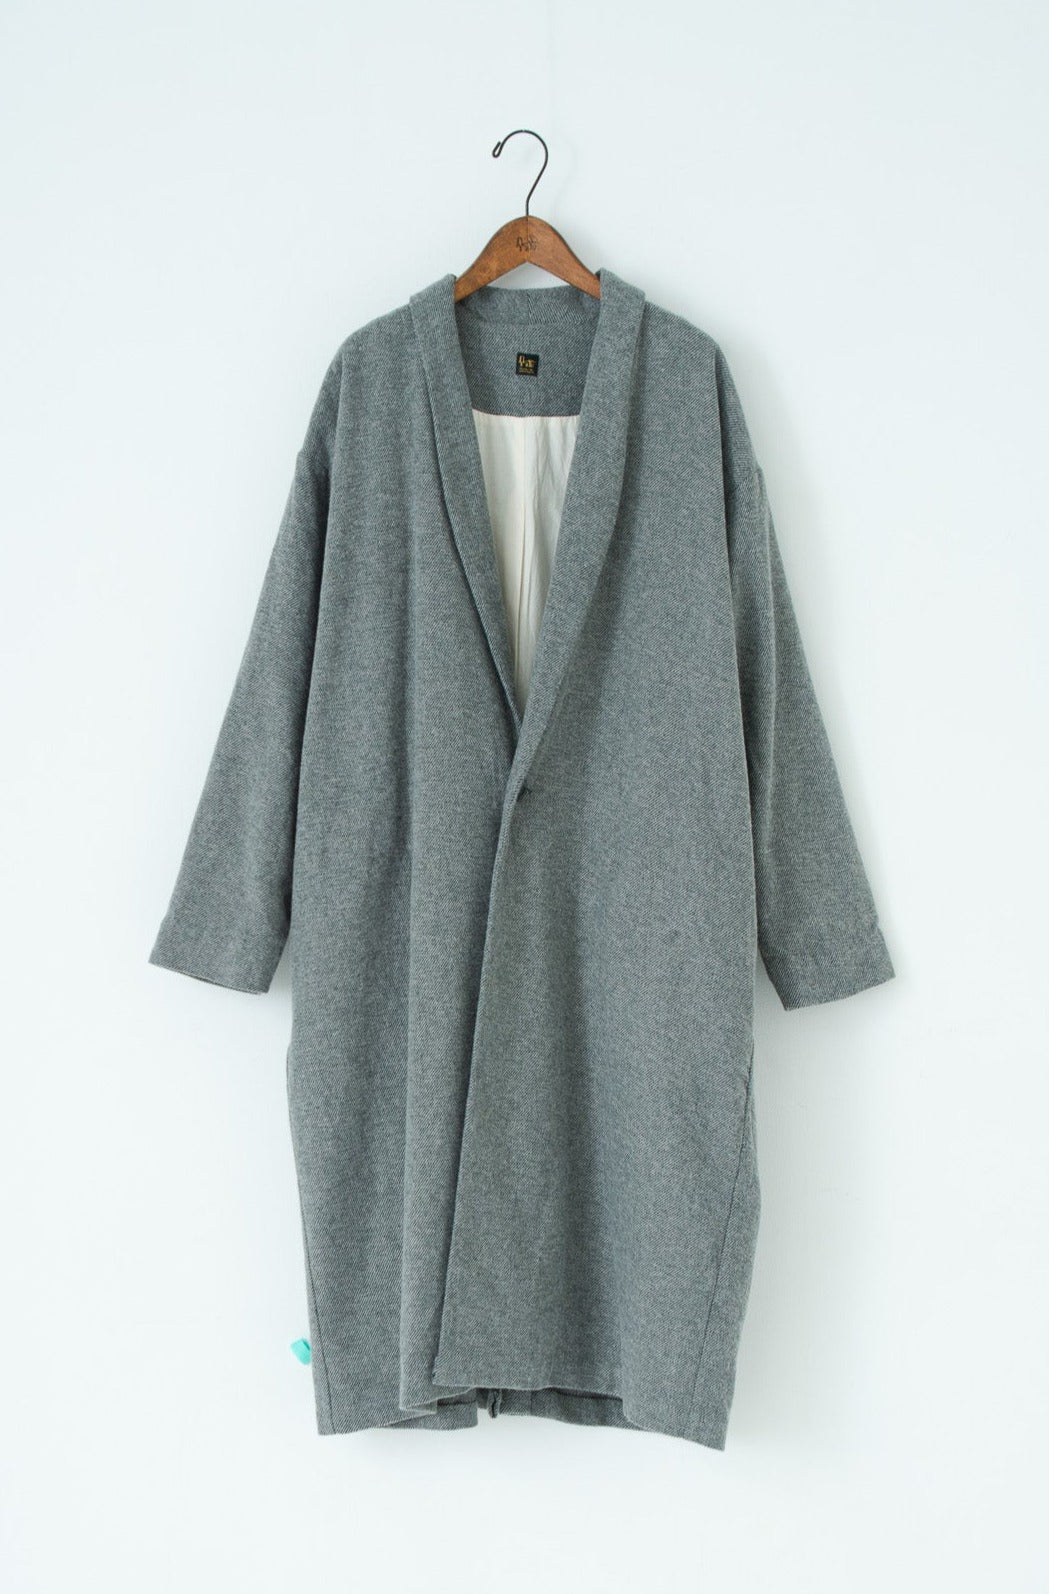 cotton tweed nomad coat